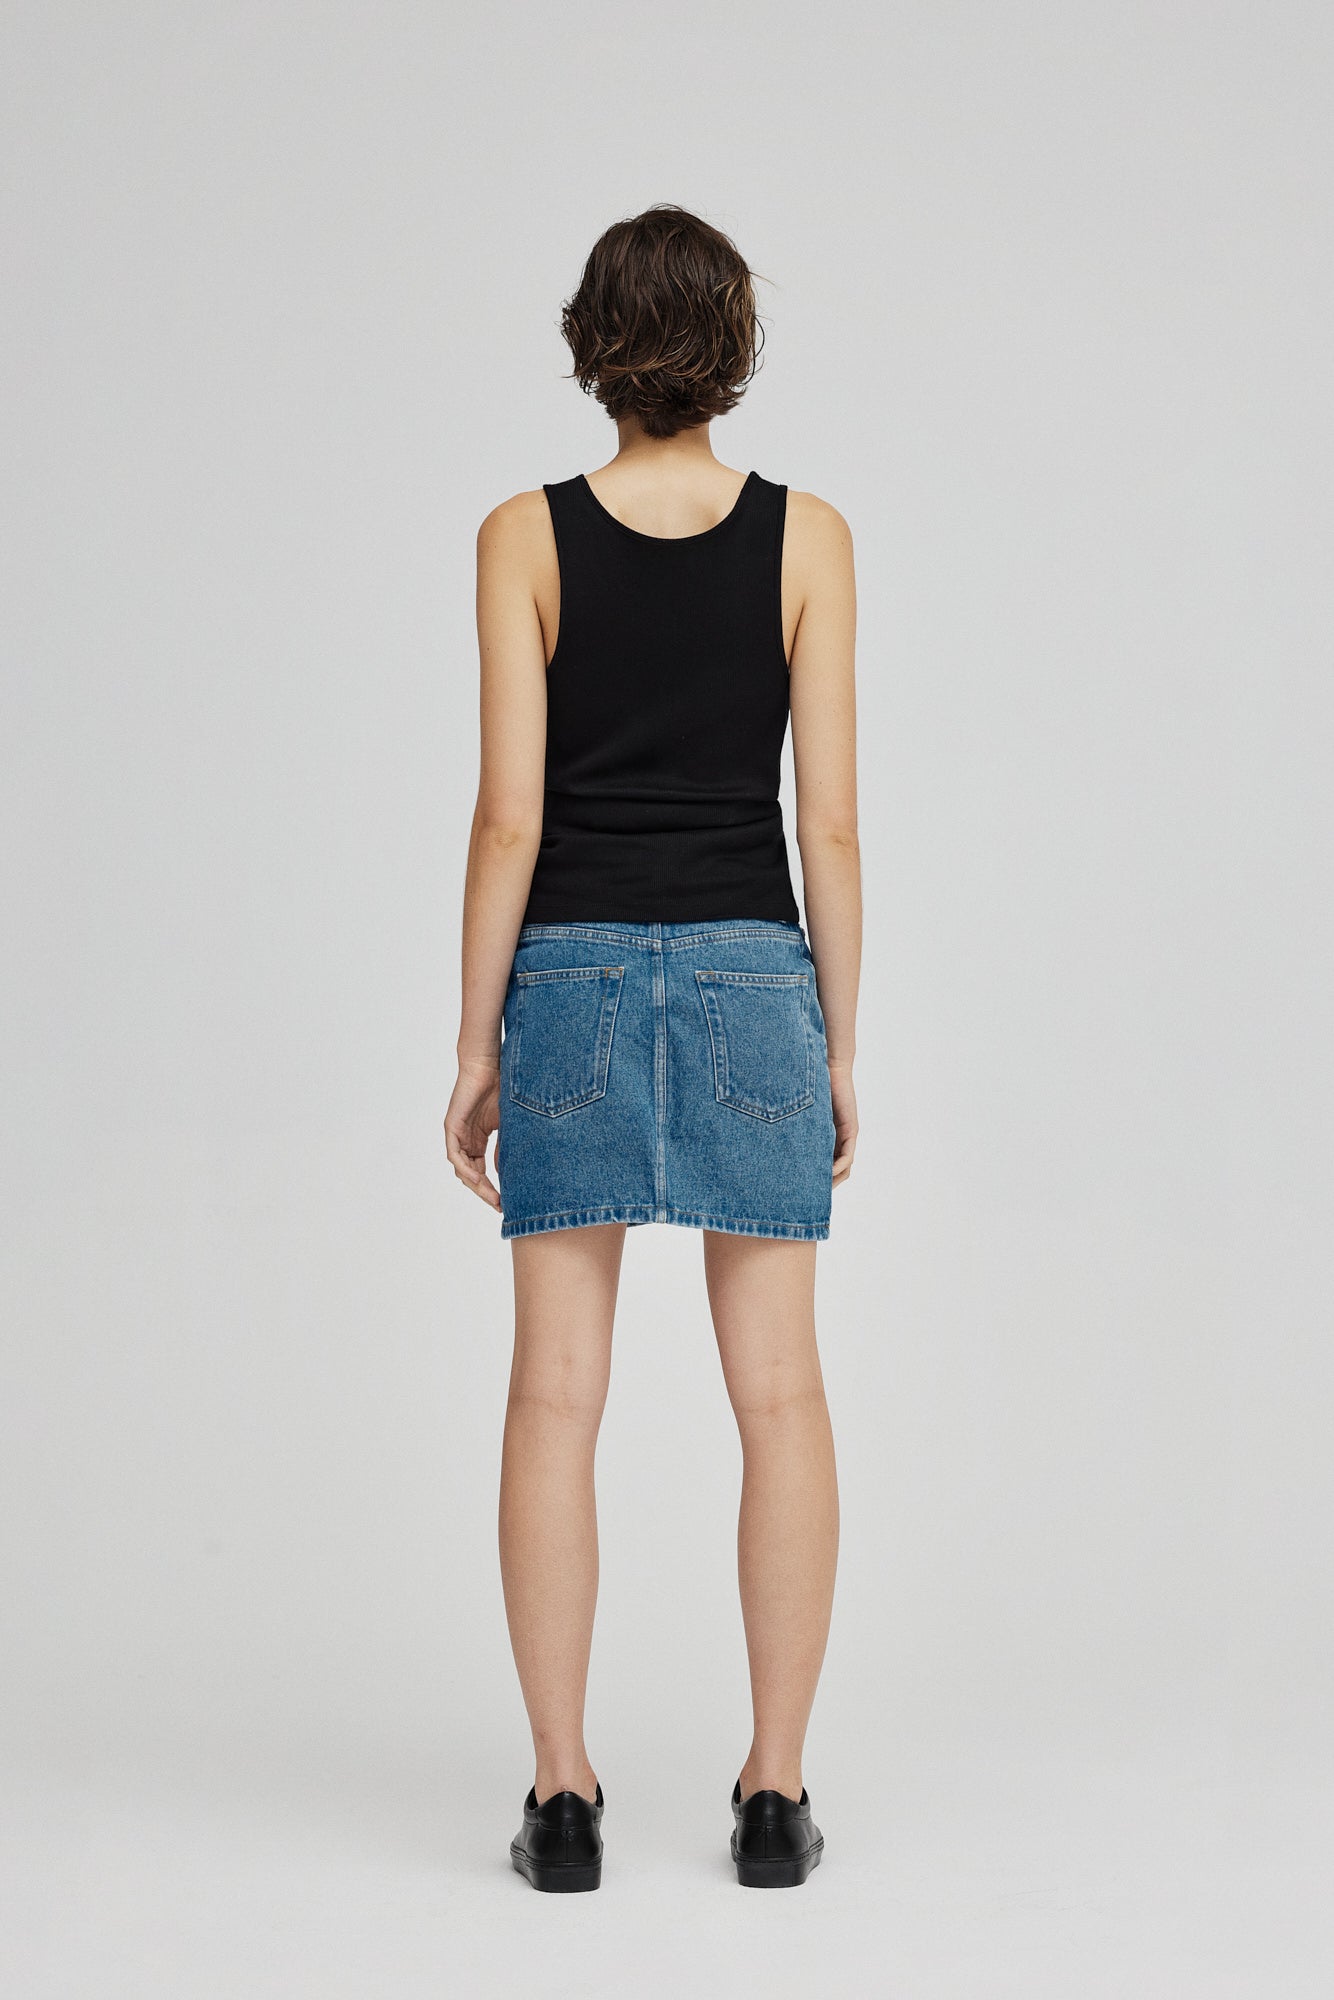 The Proper Denim Skirt ™ - The Proper Label ®